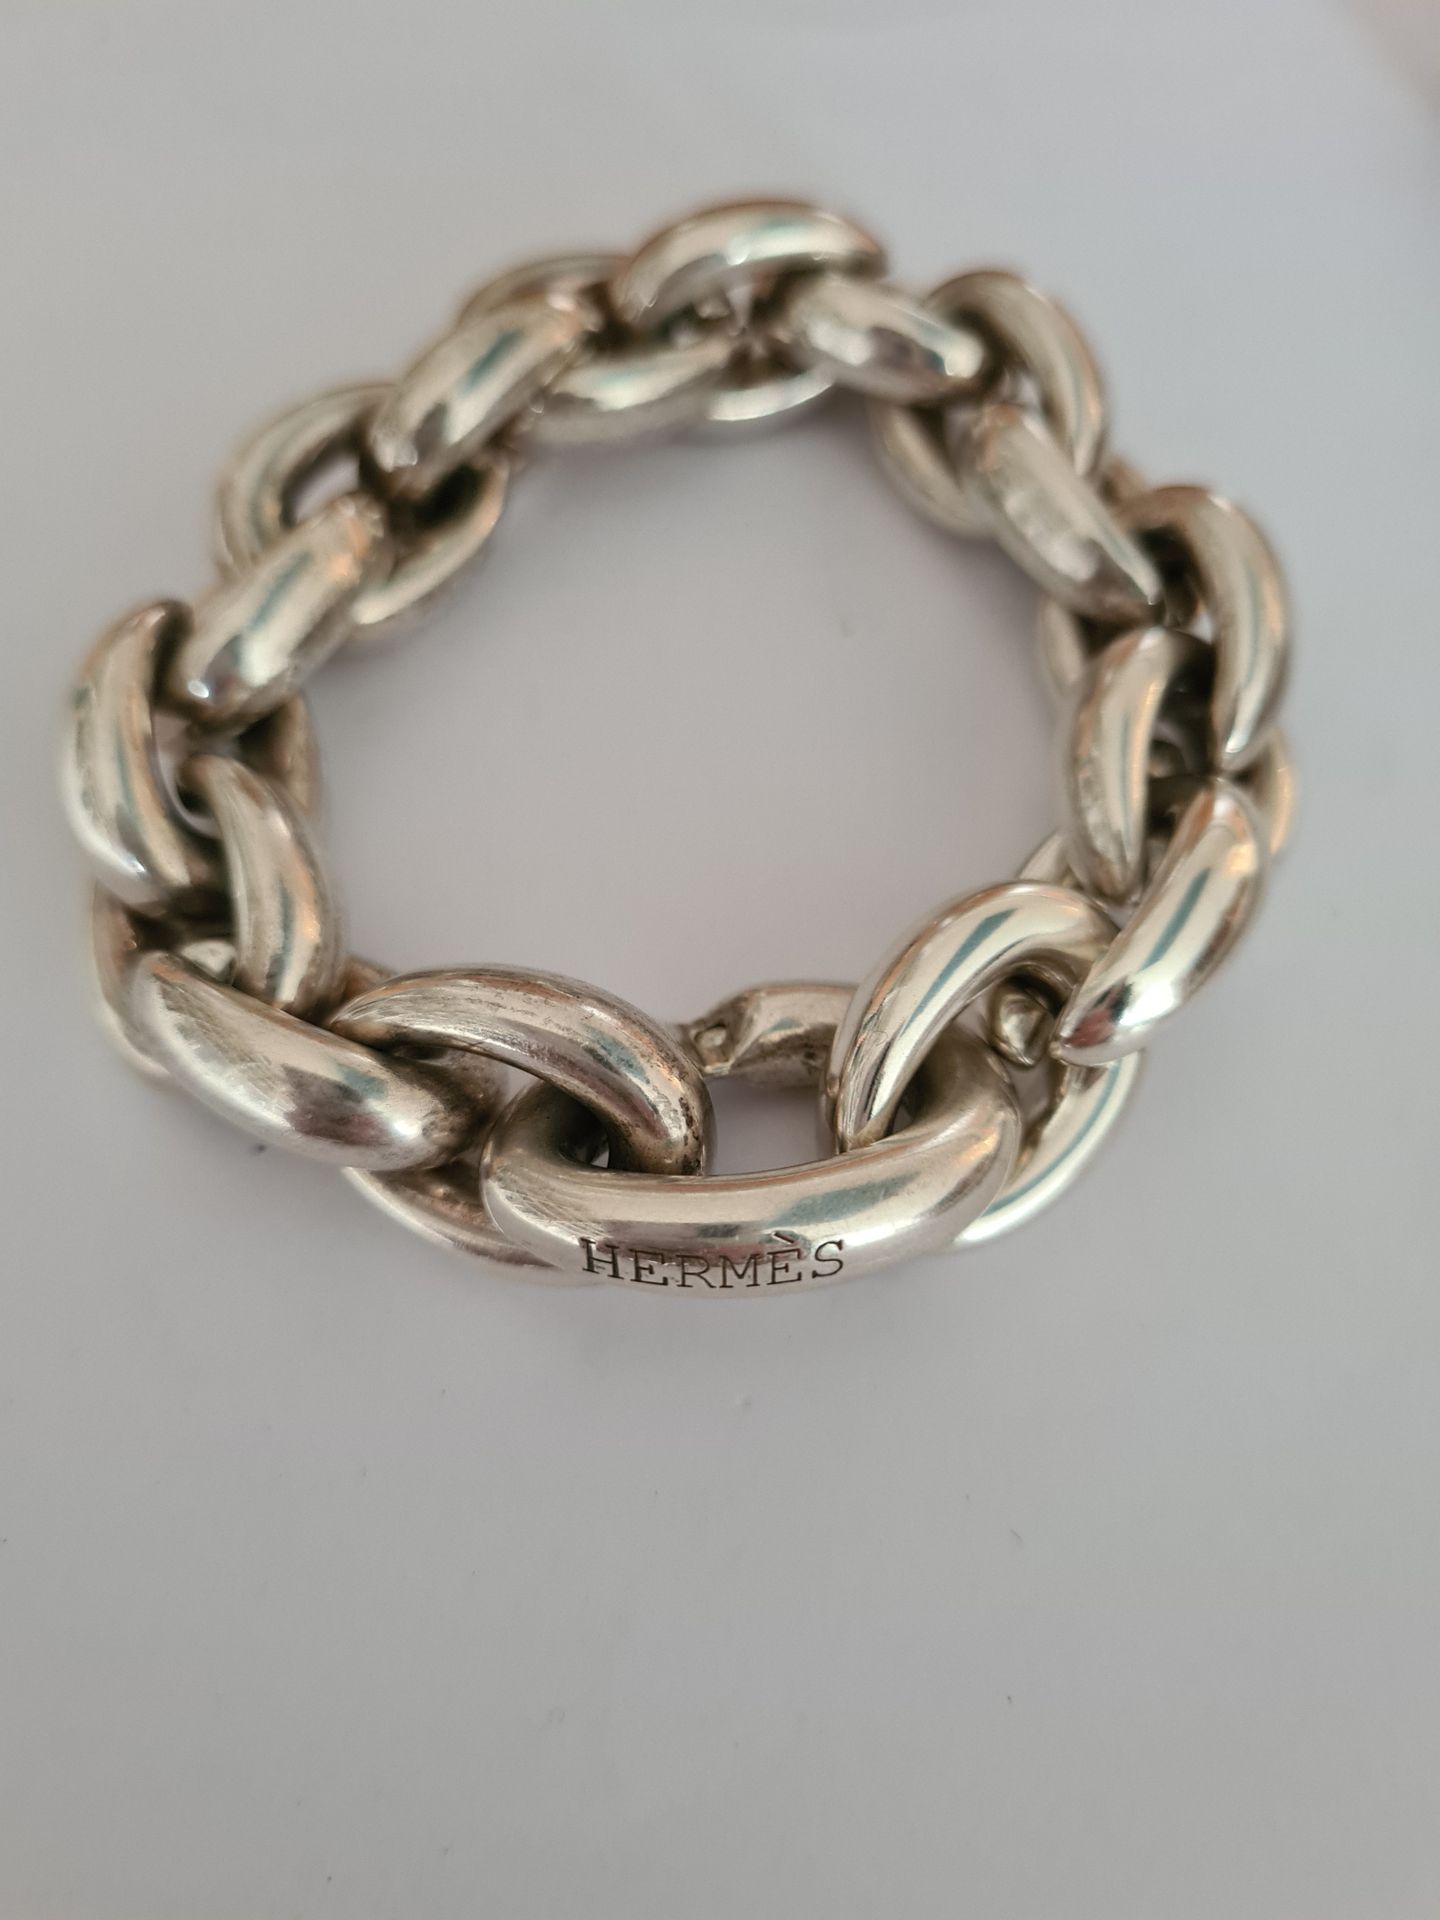 Null 
HERMÈS

手链

925°/°银制

带有尖头的链接

签名

重量 : 178,15 g

长度：22厘米